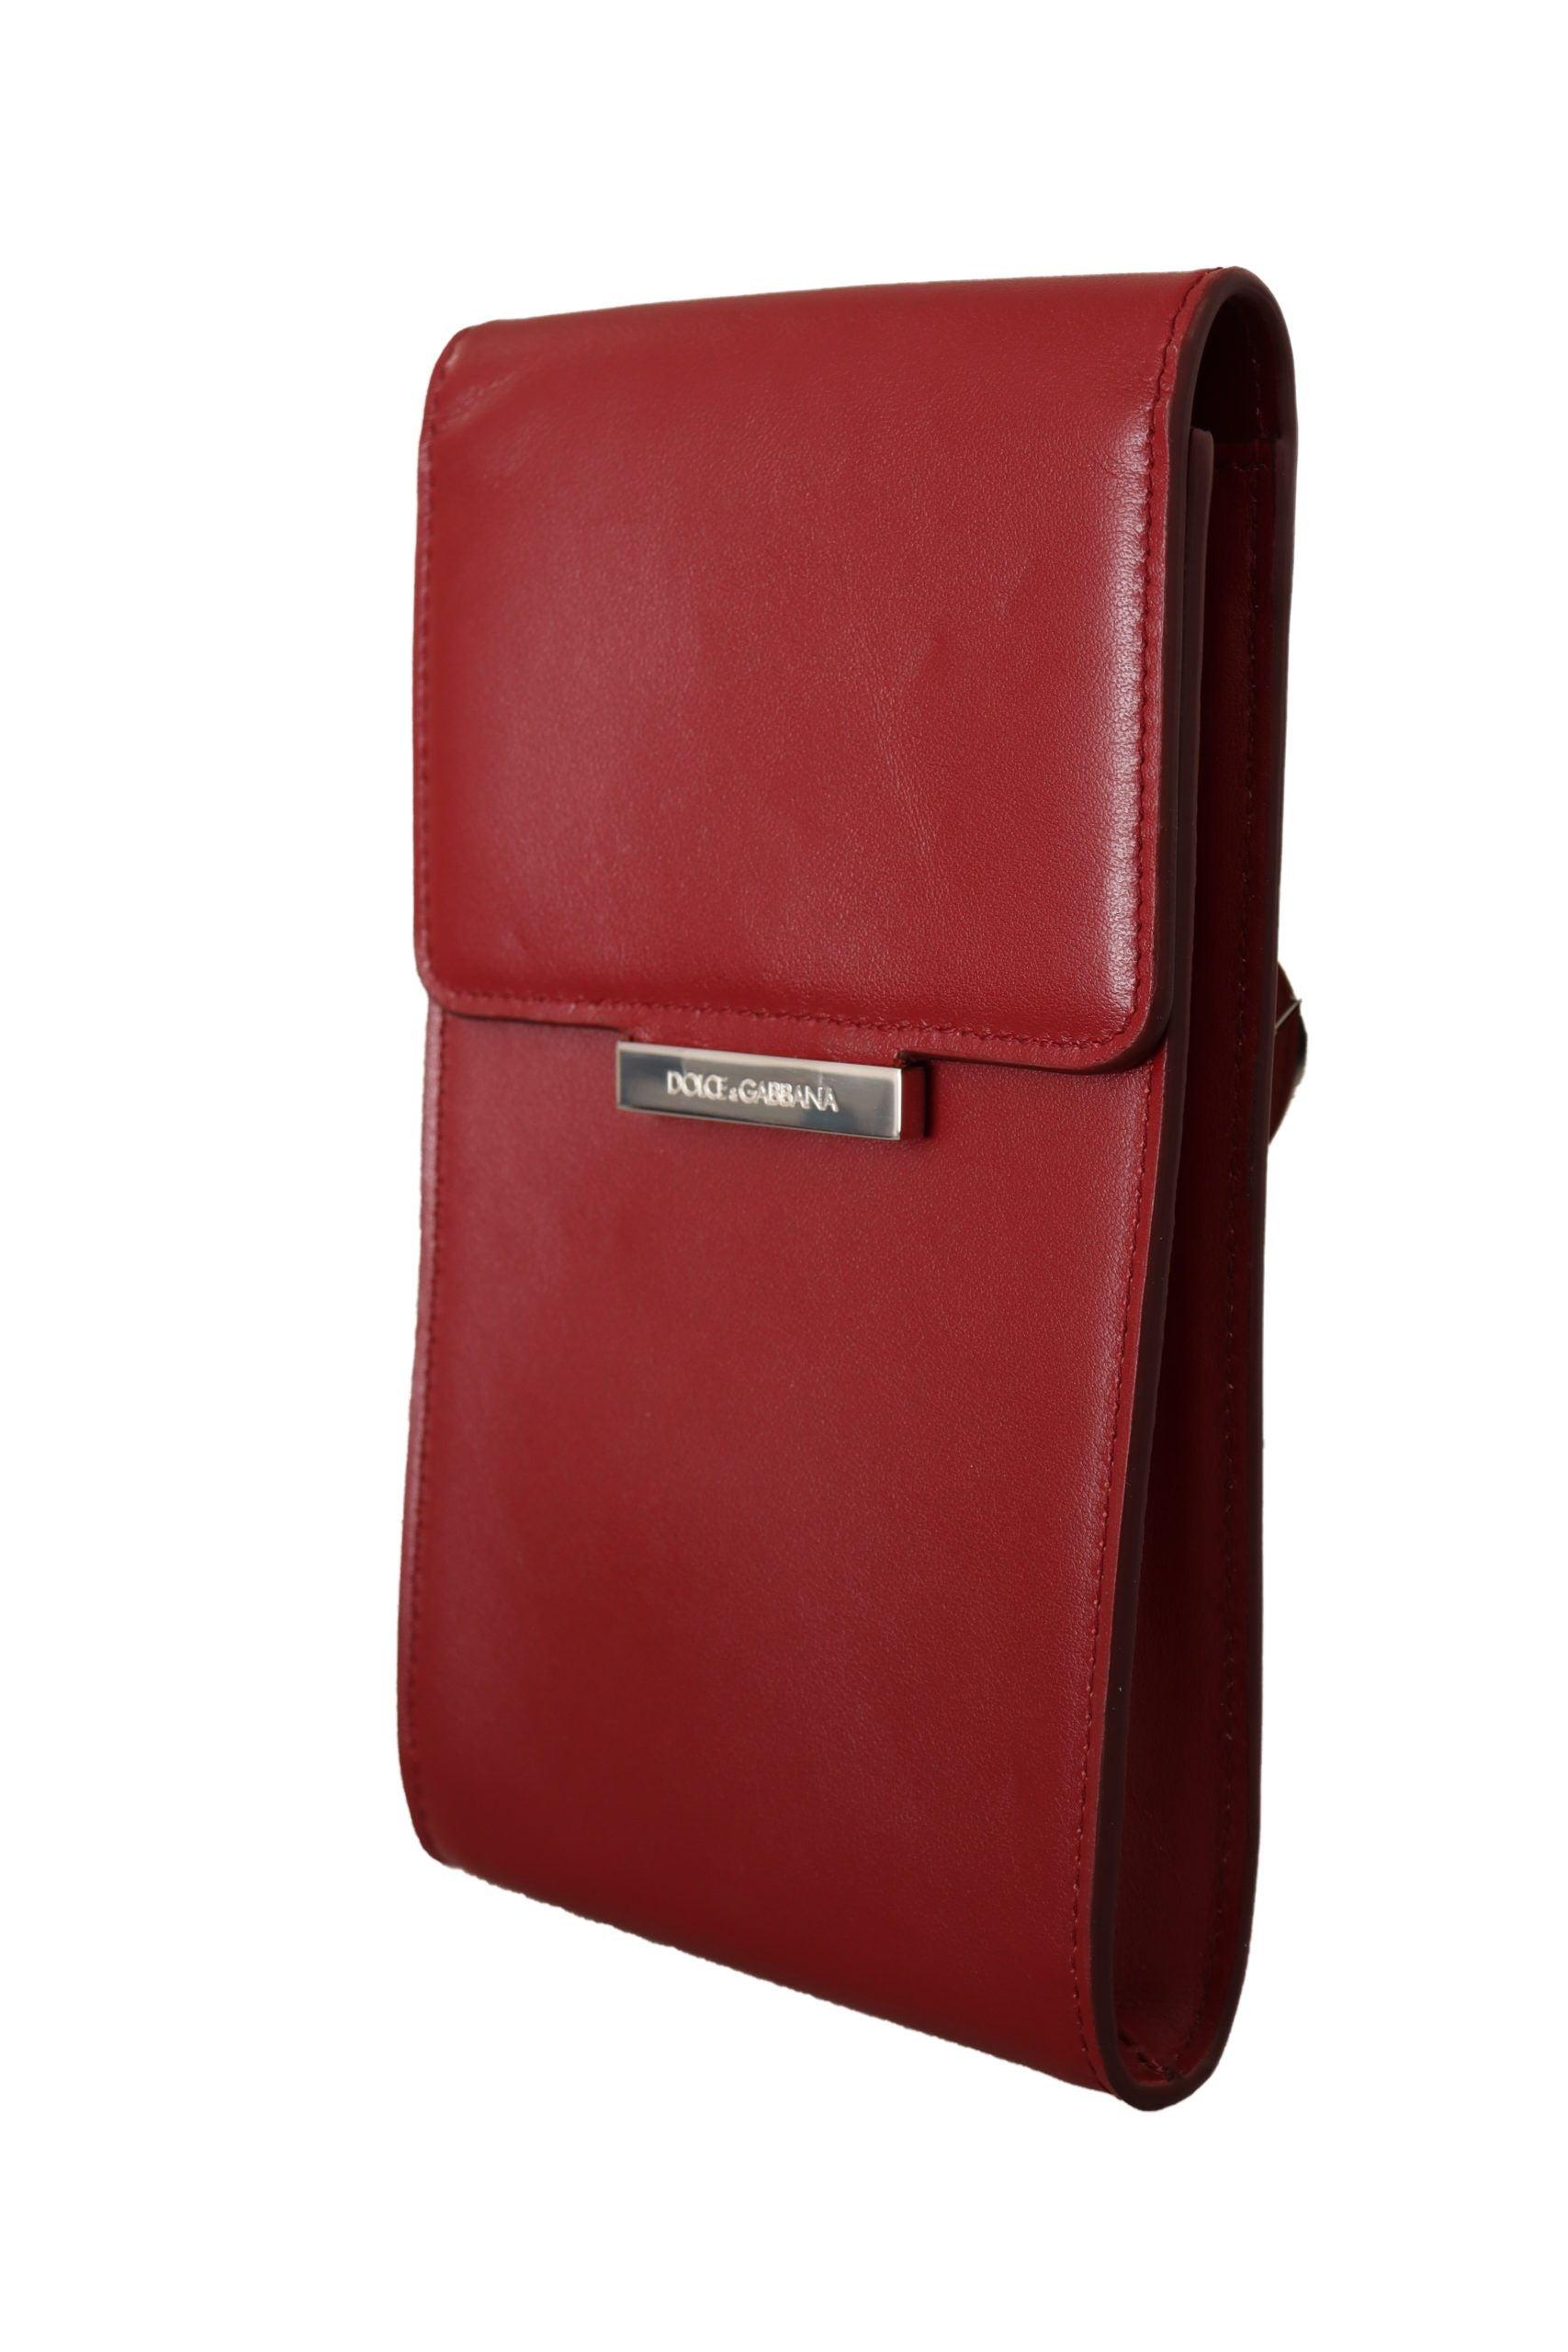 Dolce & Gabbana Red Leather Wallet Keyring Pouch Slot Pocket Wallet for Men  | Lyst